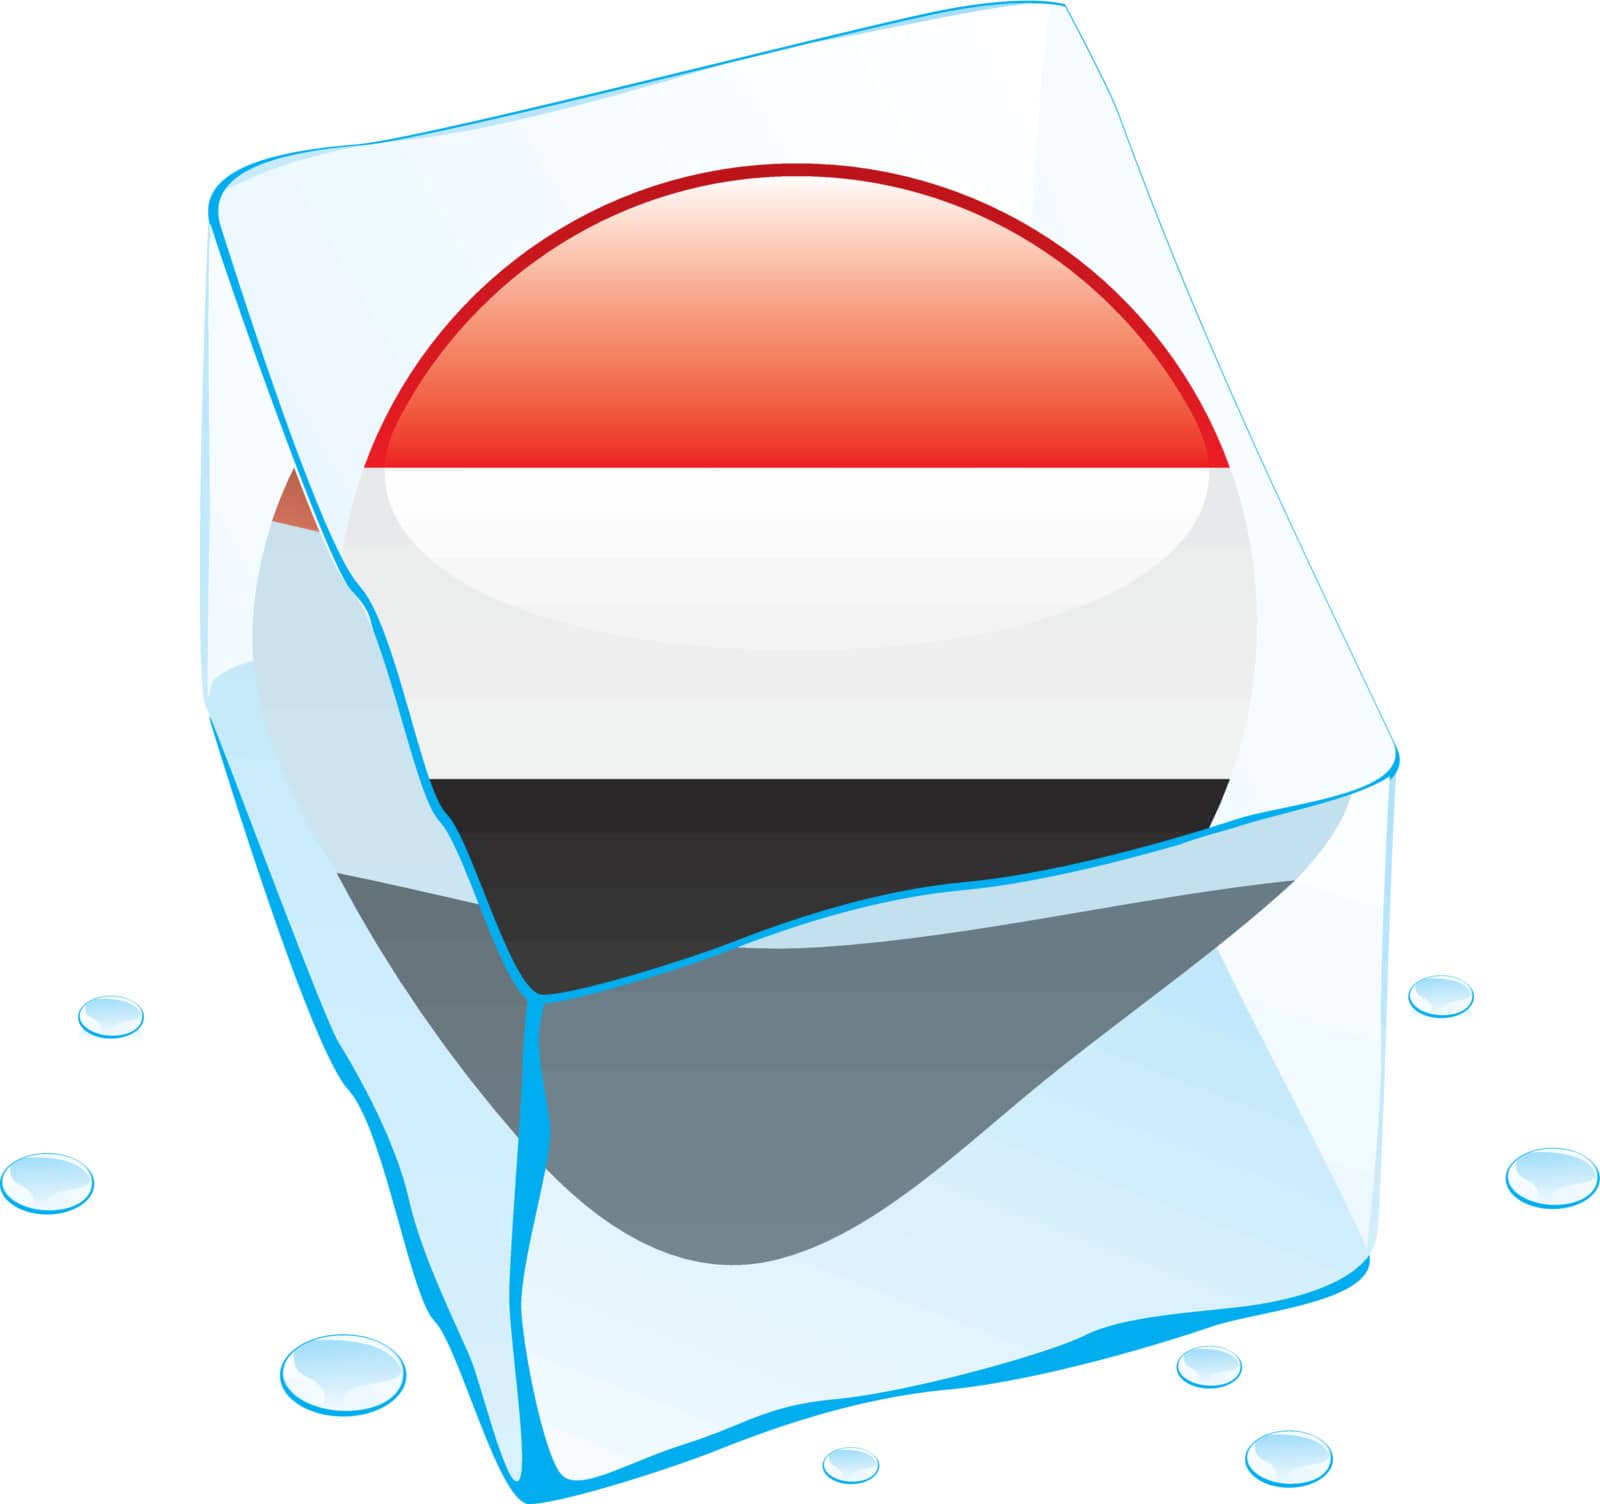 fully editable vector illustration of yemen button flag frozen in ice cube